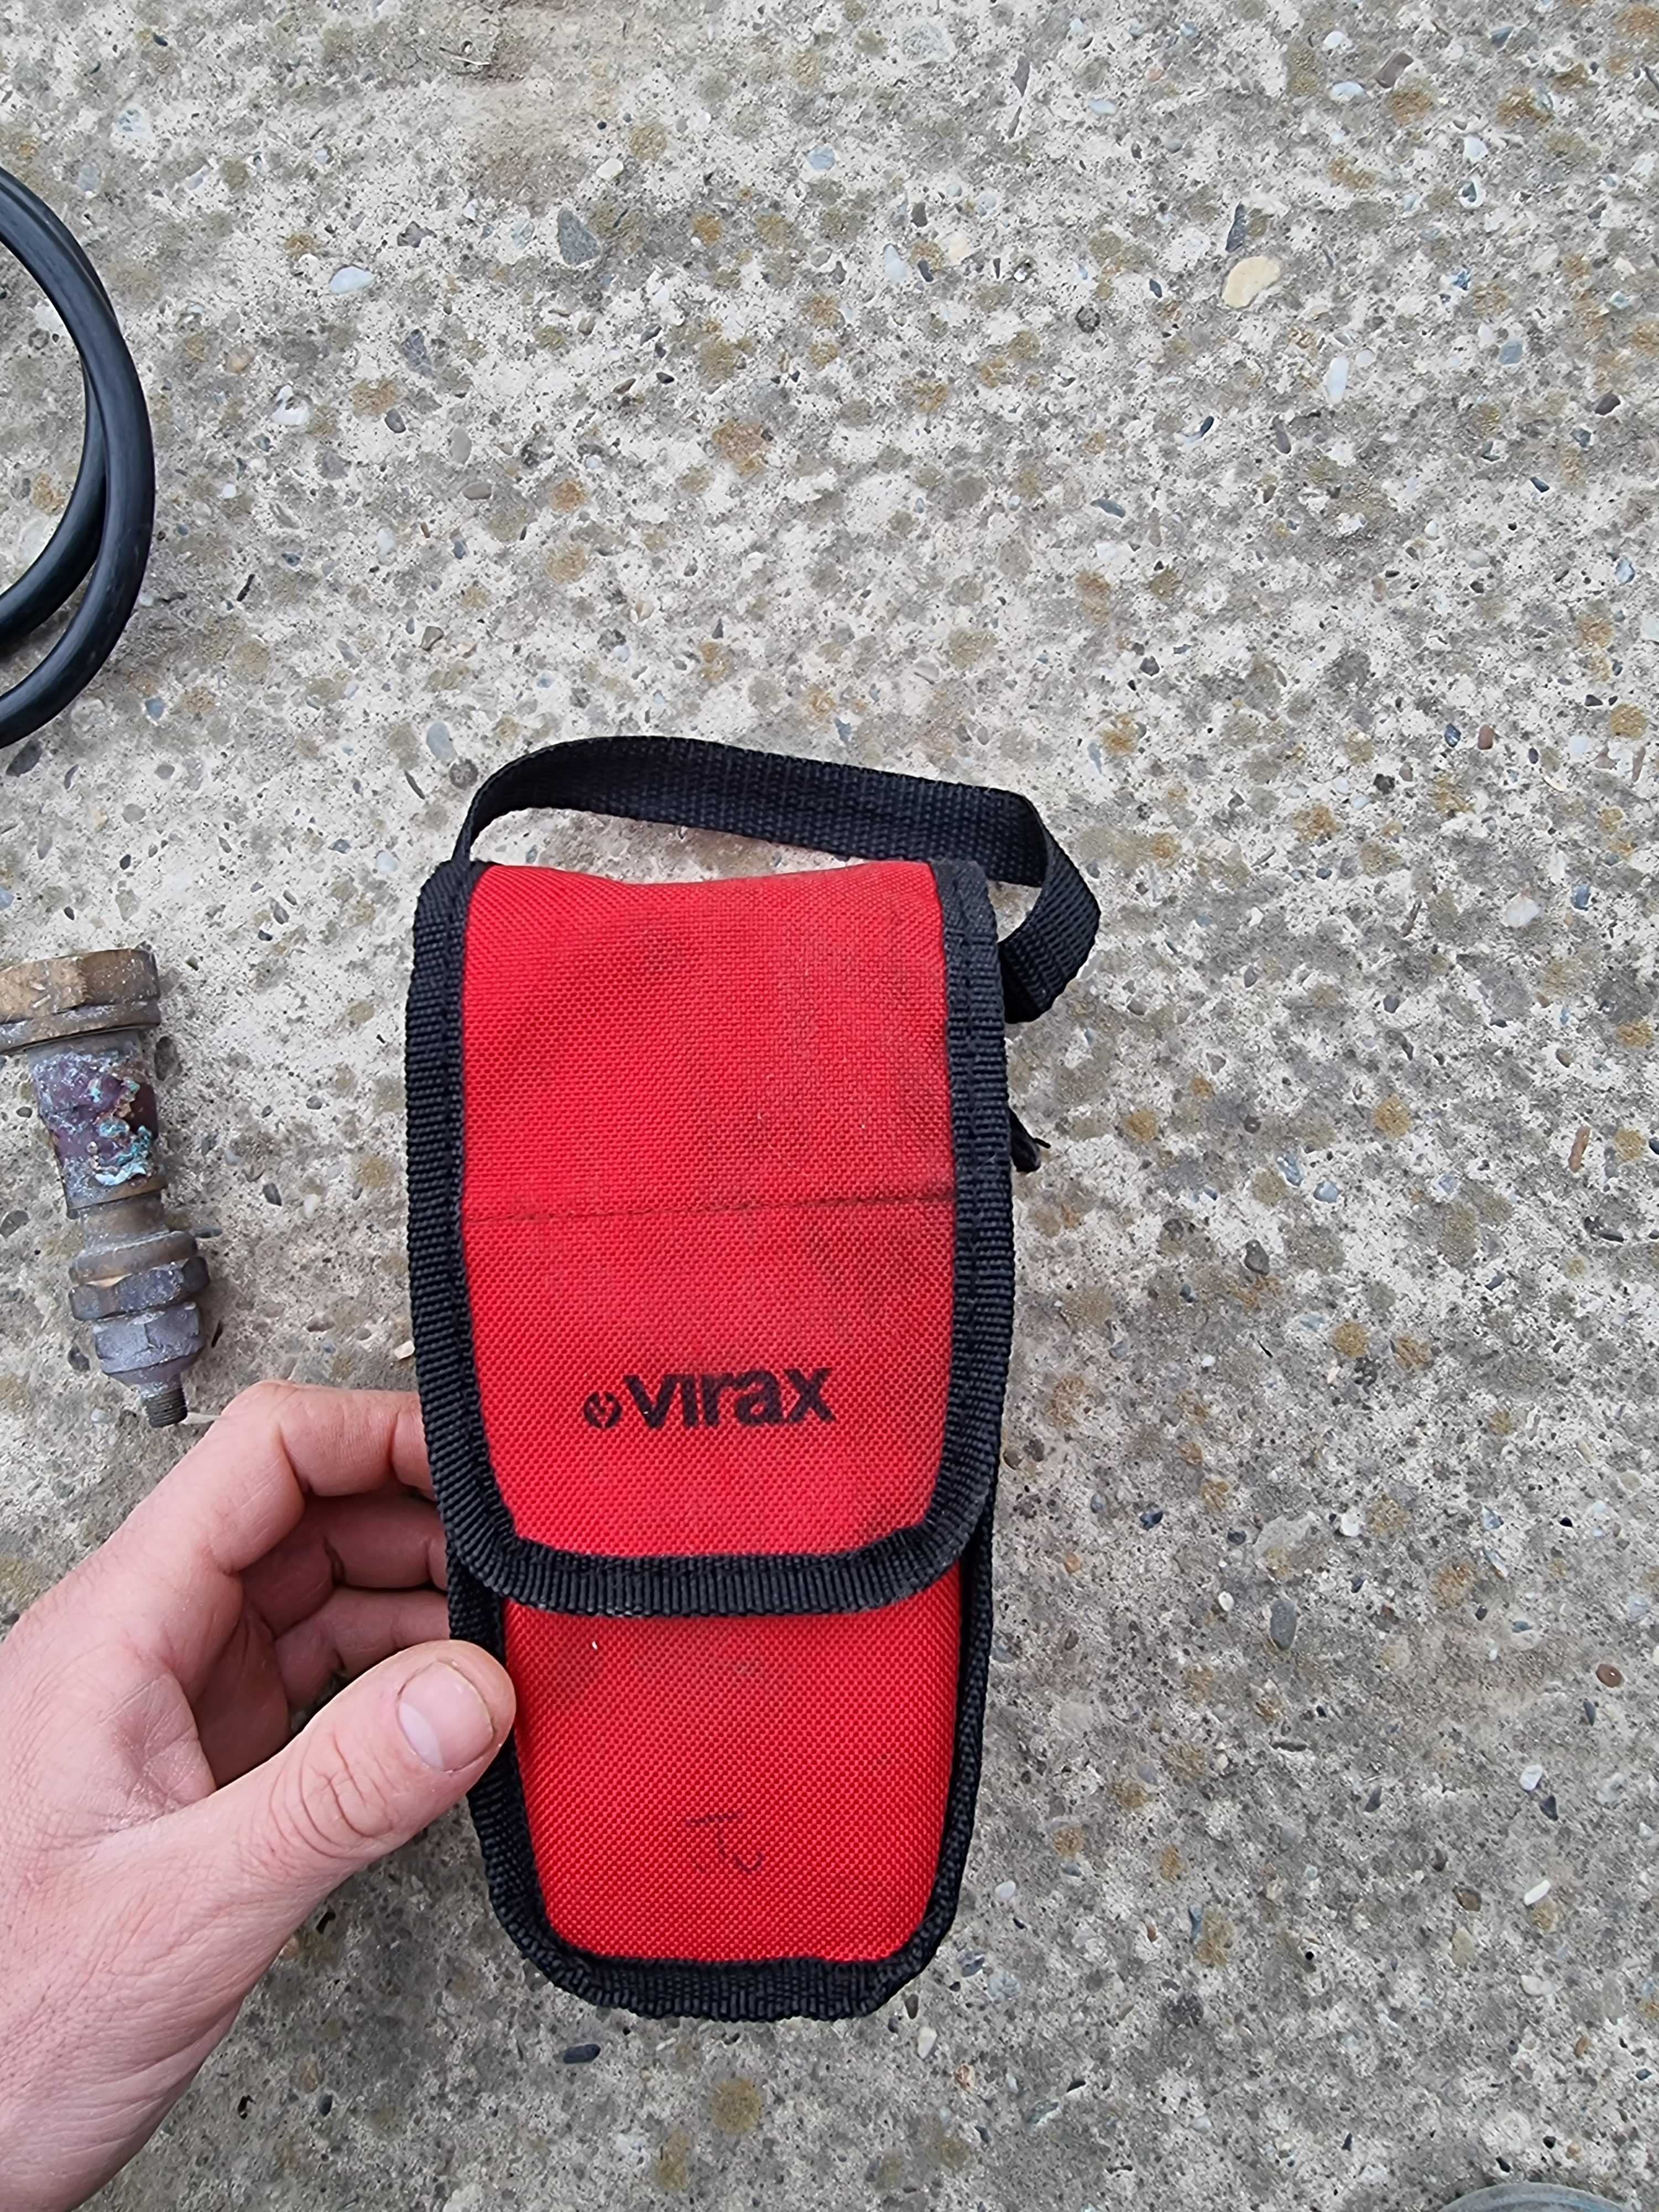 Virax 262080 Verificat Scurgeri Instalatie Gaz Ceas Tester Detector